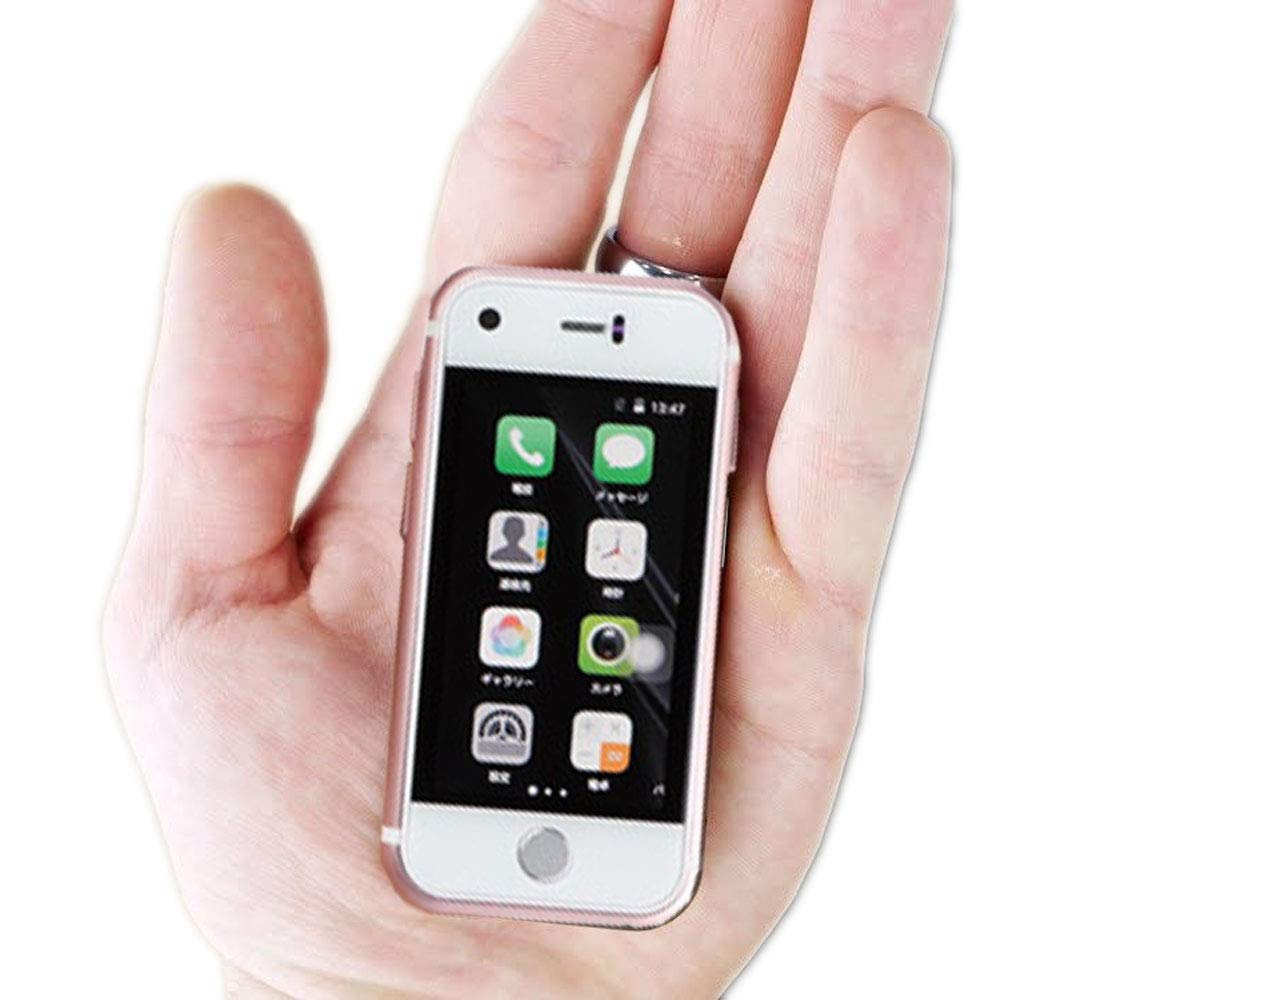 SMALLEST MOBILE PHONES UK